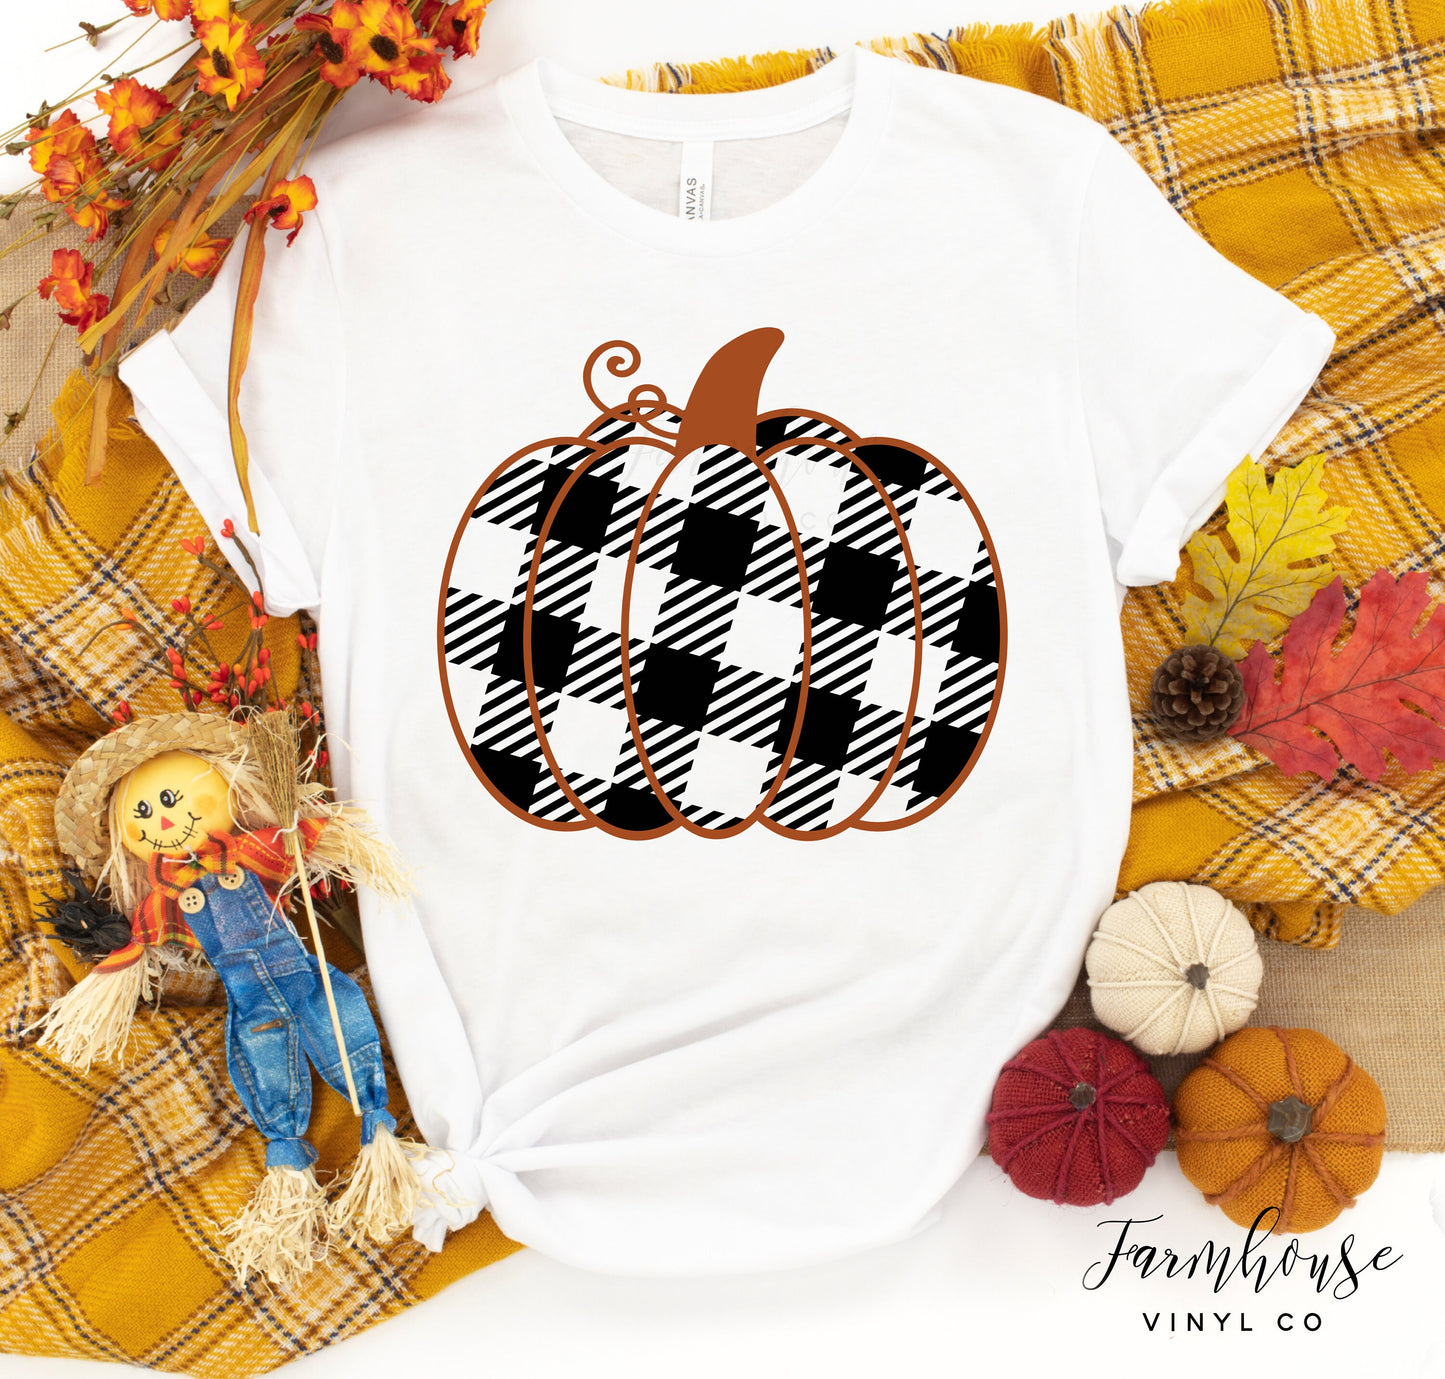 Fall Plaid Pumpkin Unisex Bella Canvas T-Shirt~Fall Shirts~Autumn Shirt~Halloween Decor~Fall Home Decor~Farmhouse Buffalo Plaid Pumpkin - Farmhouse Vinyl Co